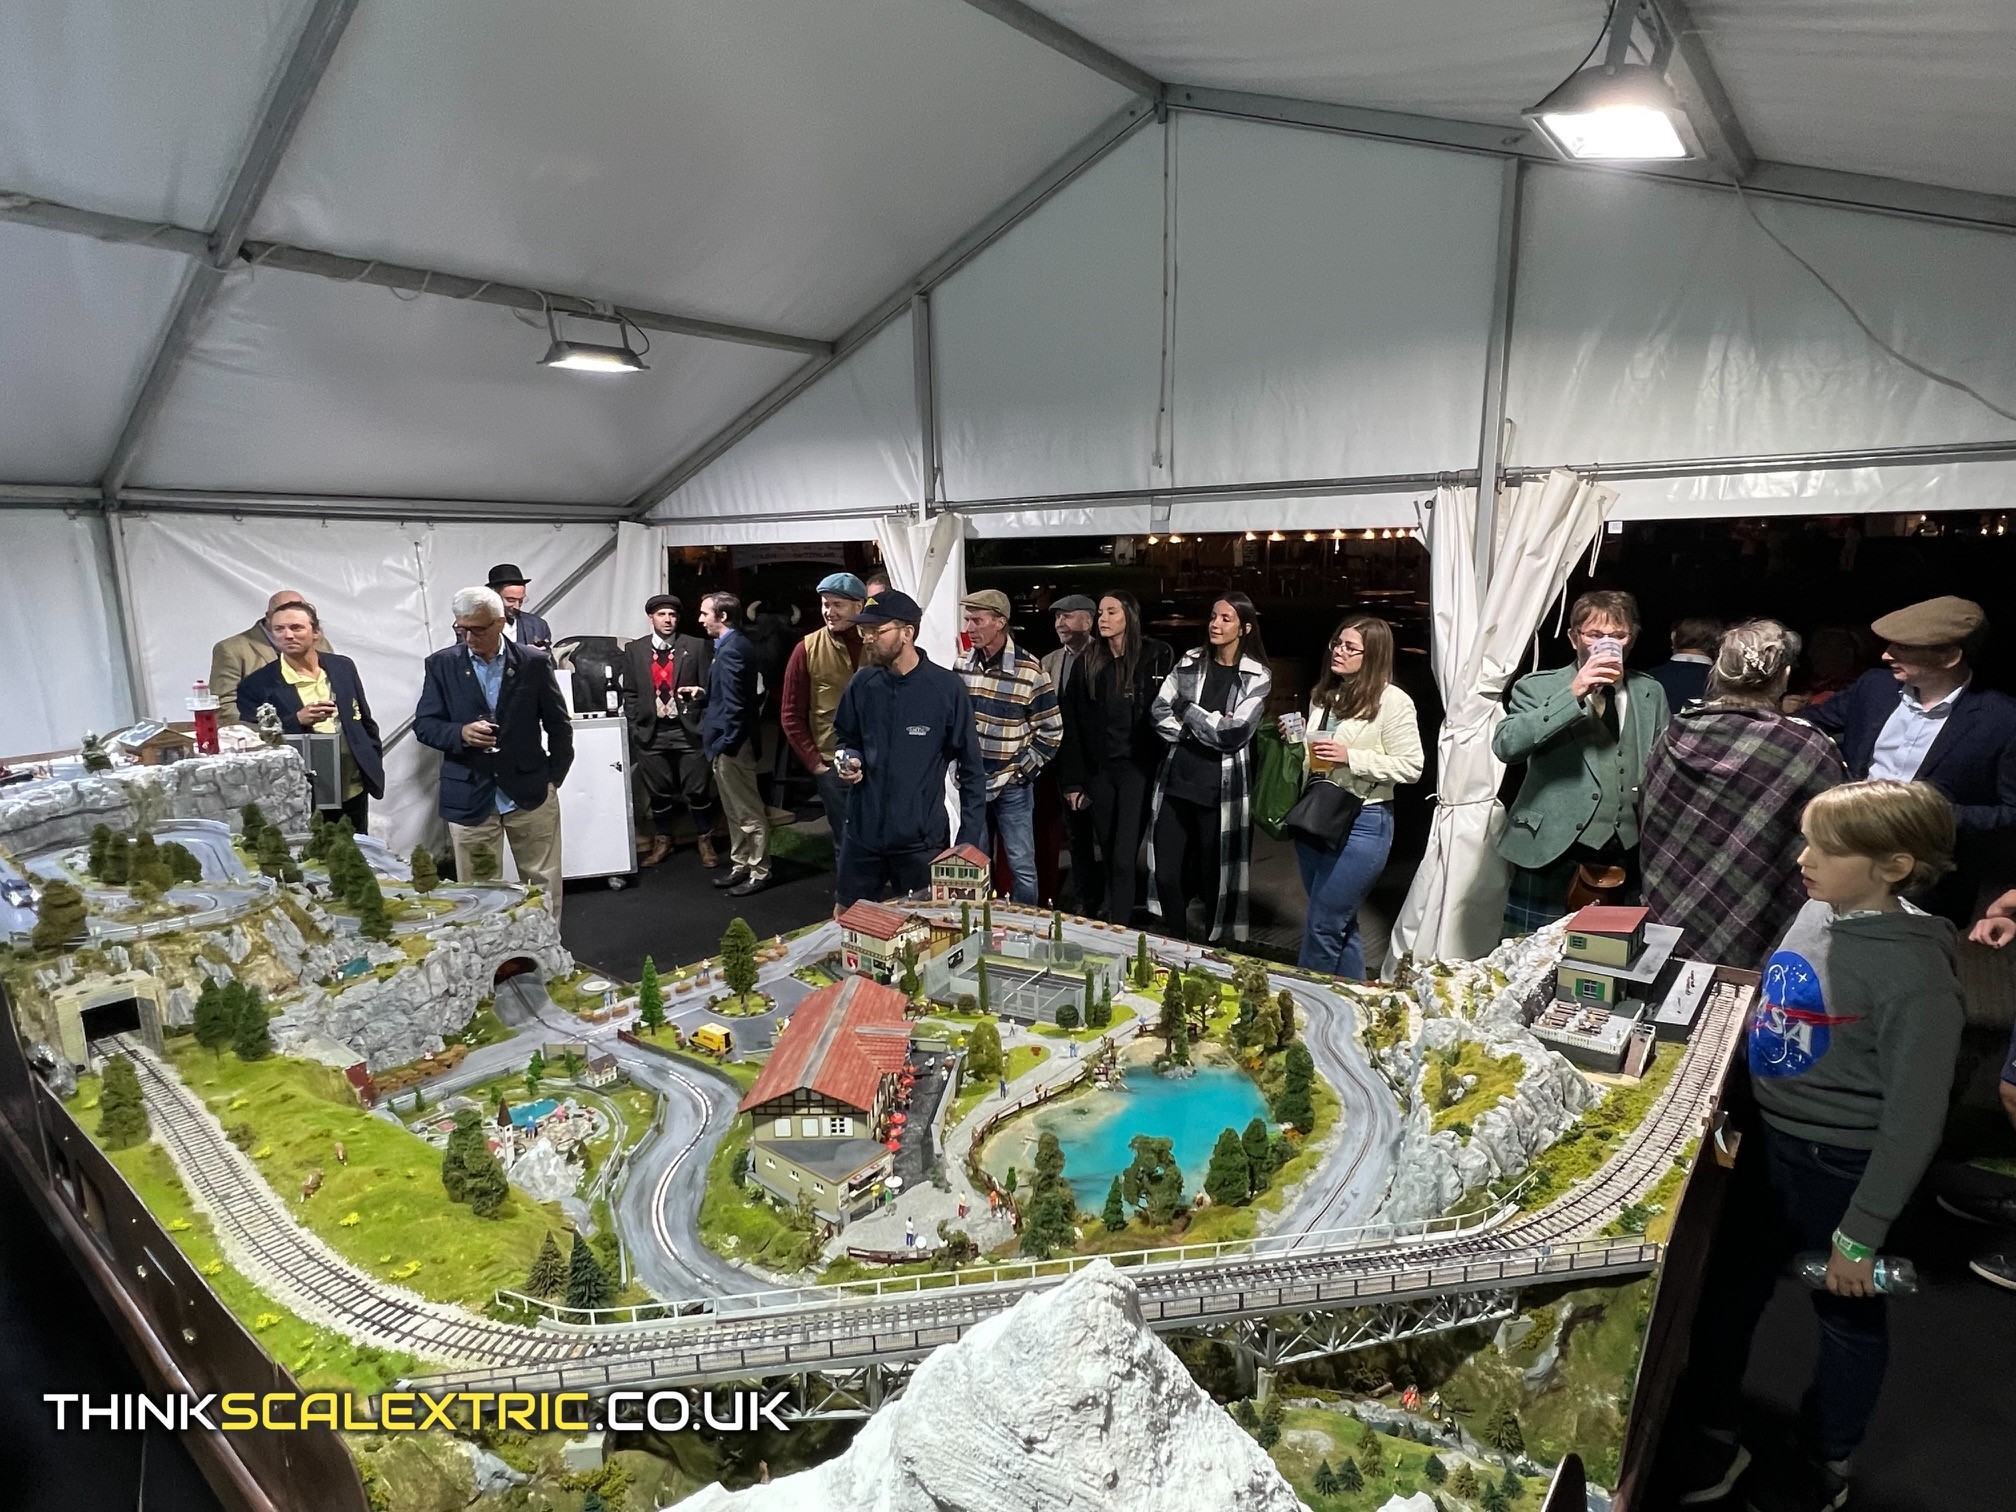 switzerland swiss tourism goodwood revival bespoke scalextric slot car hill climb track